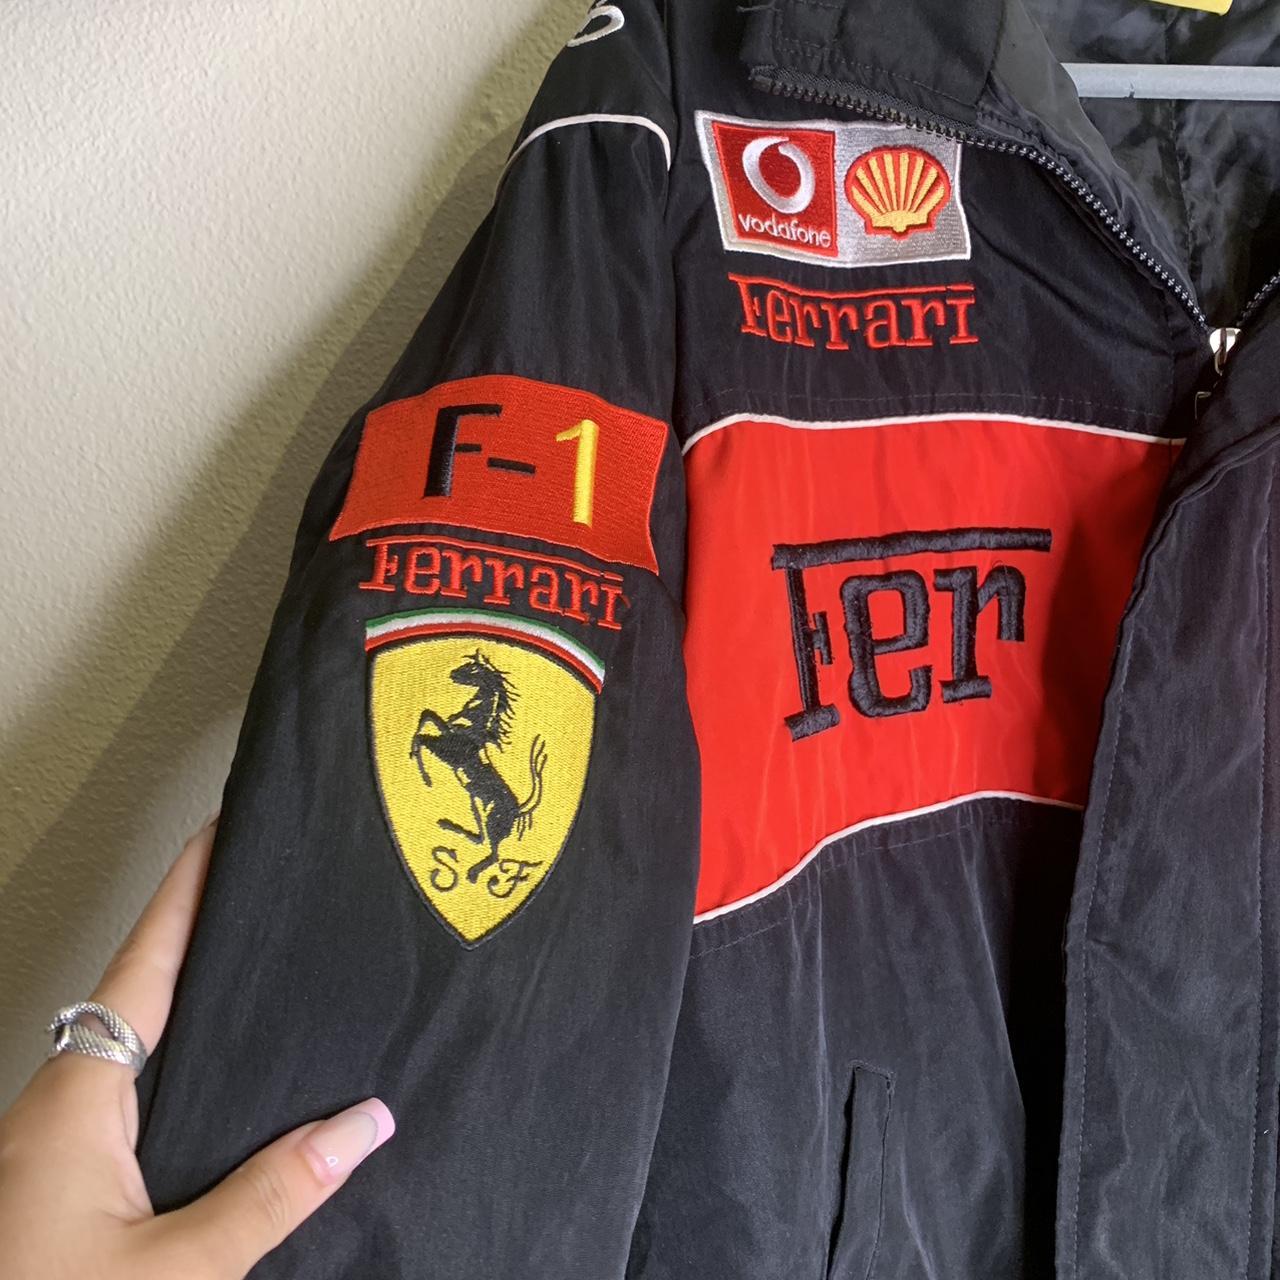 Ferrari jacket in perfect condition #ferrari... - Depop